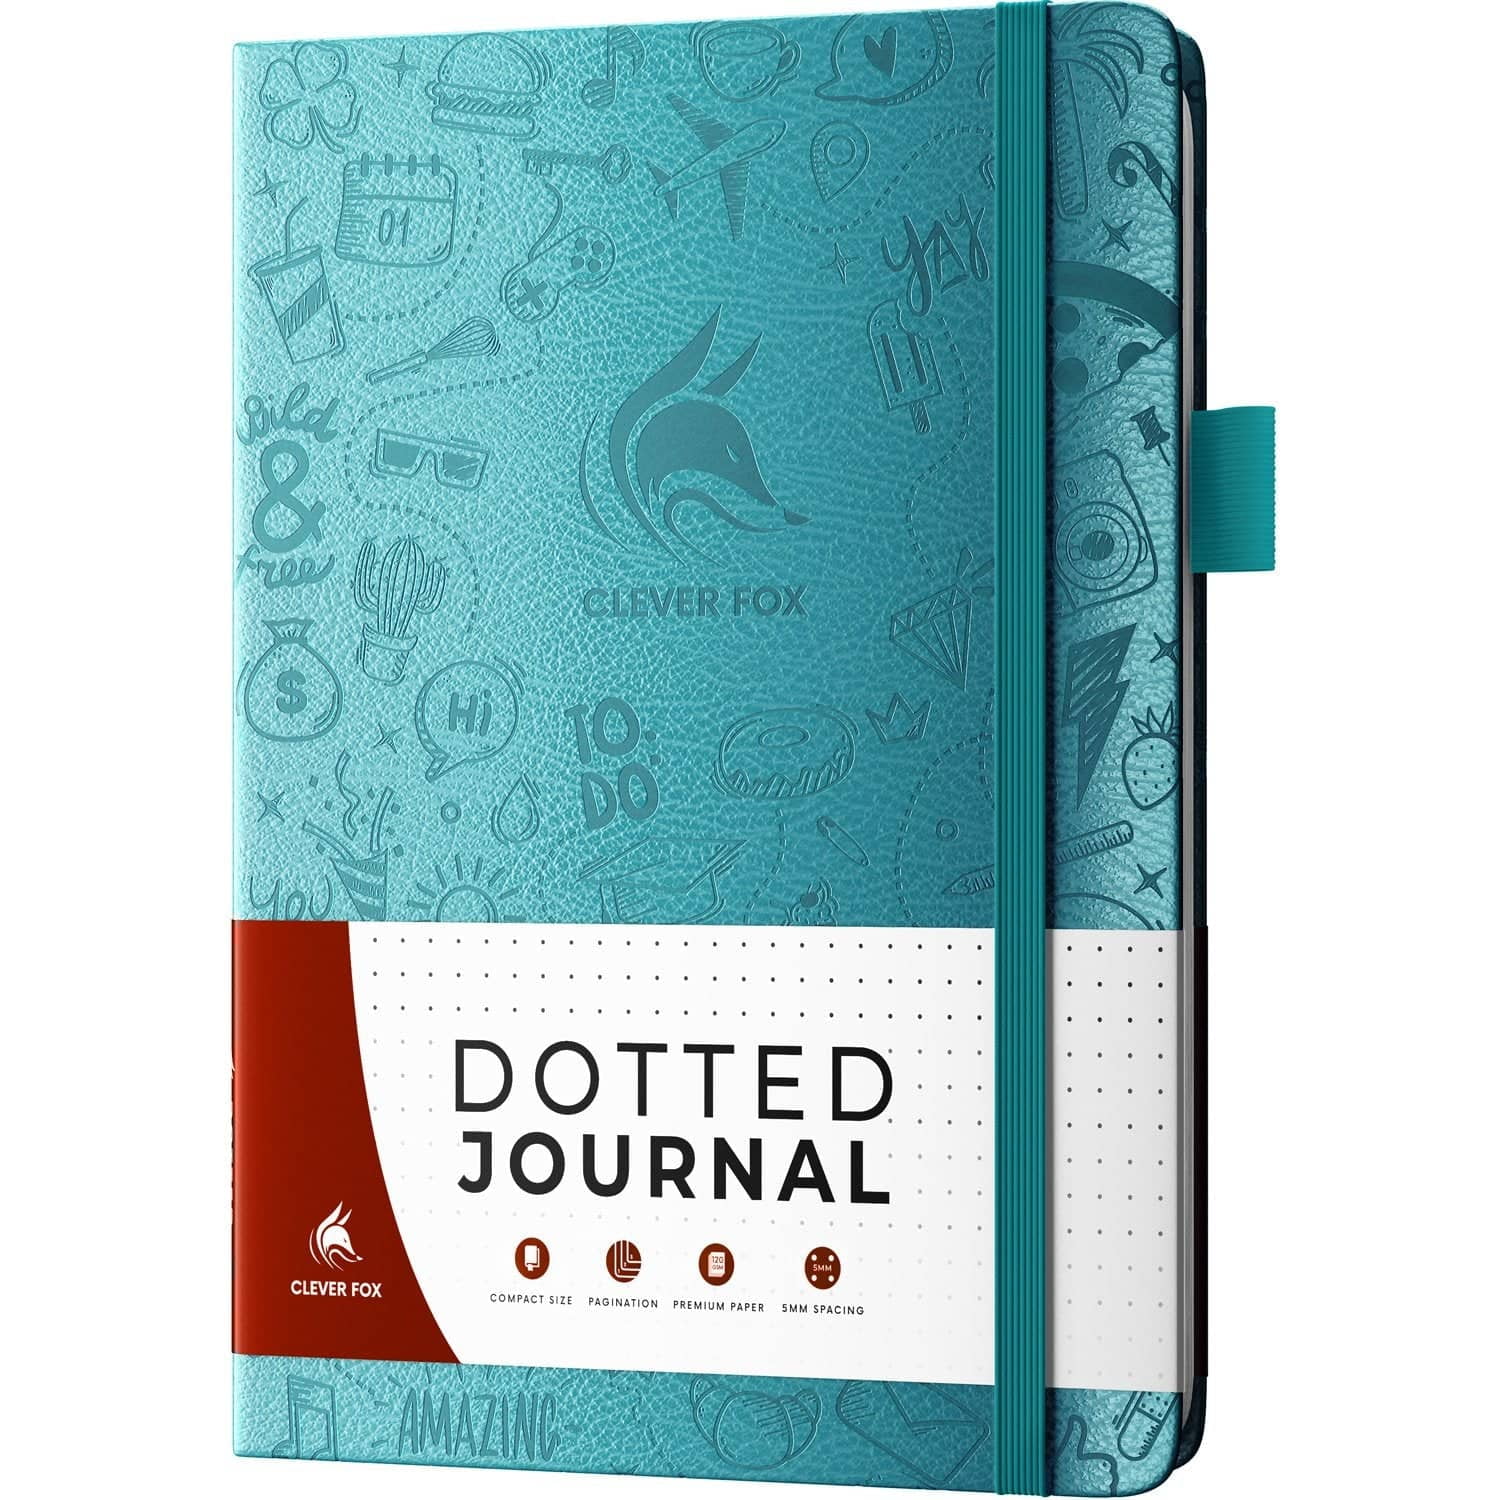 Clever Fox Dotted Notebook Comparison: Original versus 2.0 Journal